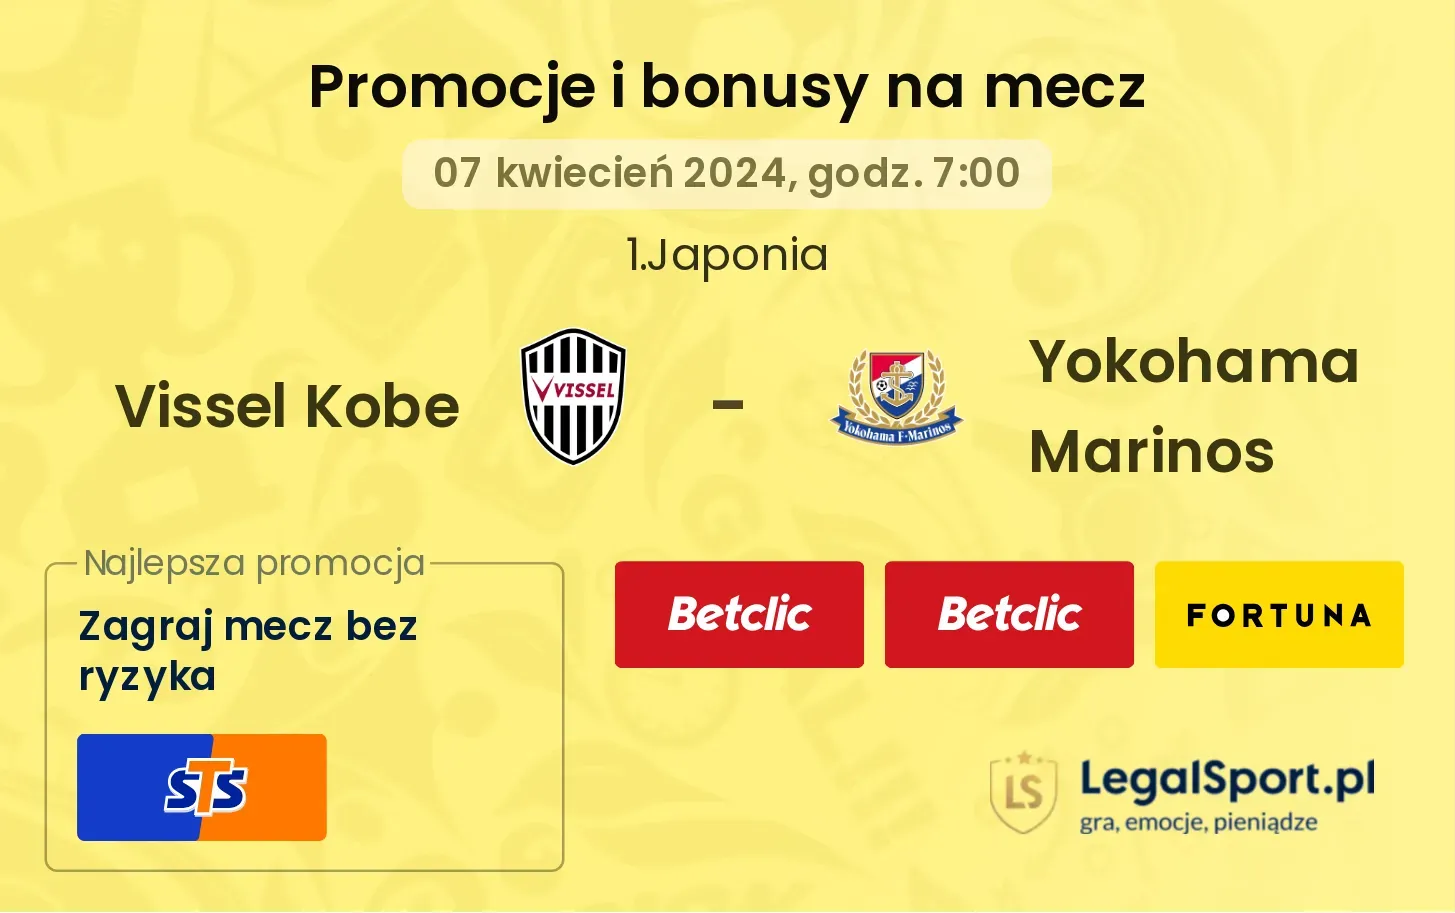 Vissel Kobe - Yokohama Marinos promocje bonusy na mecz